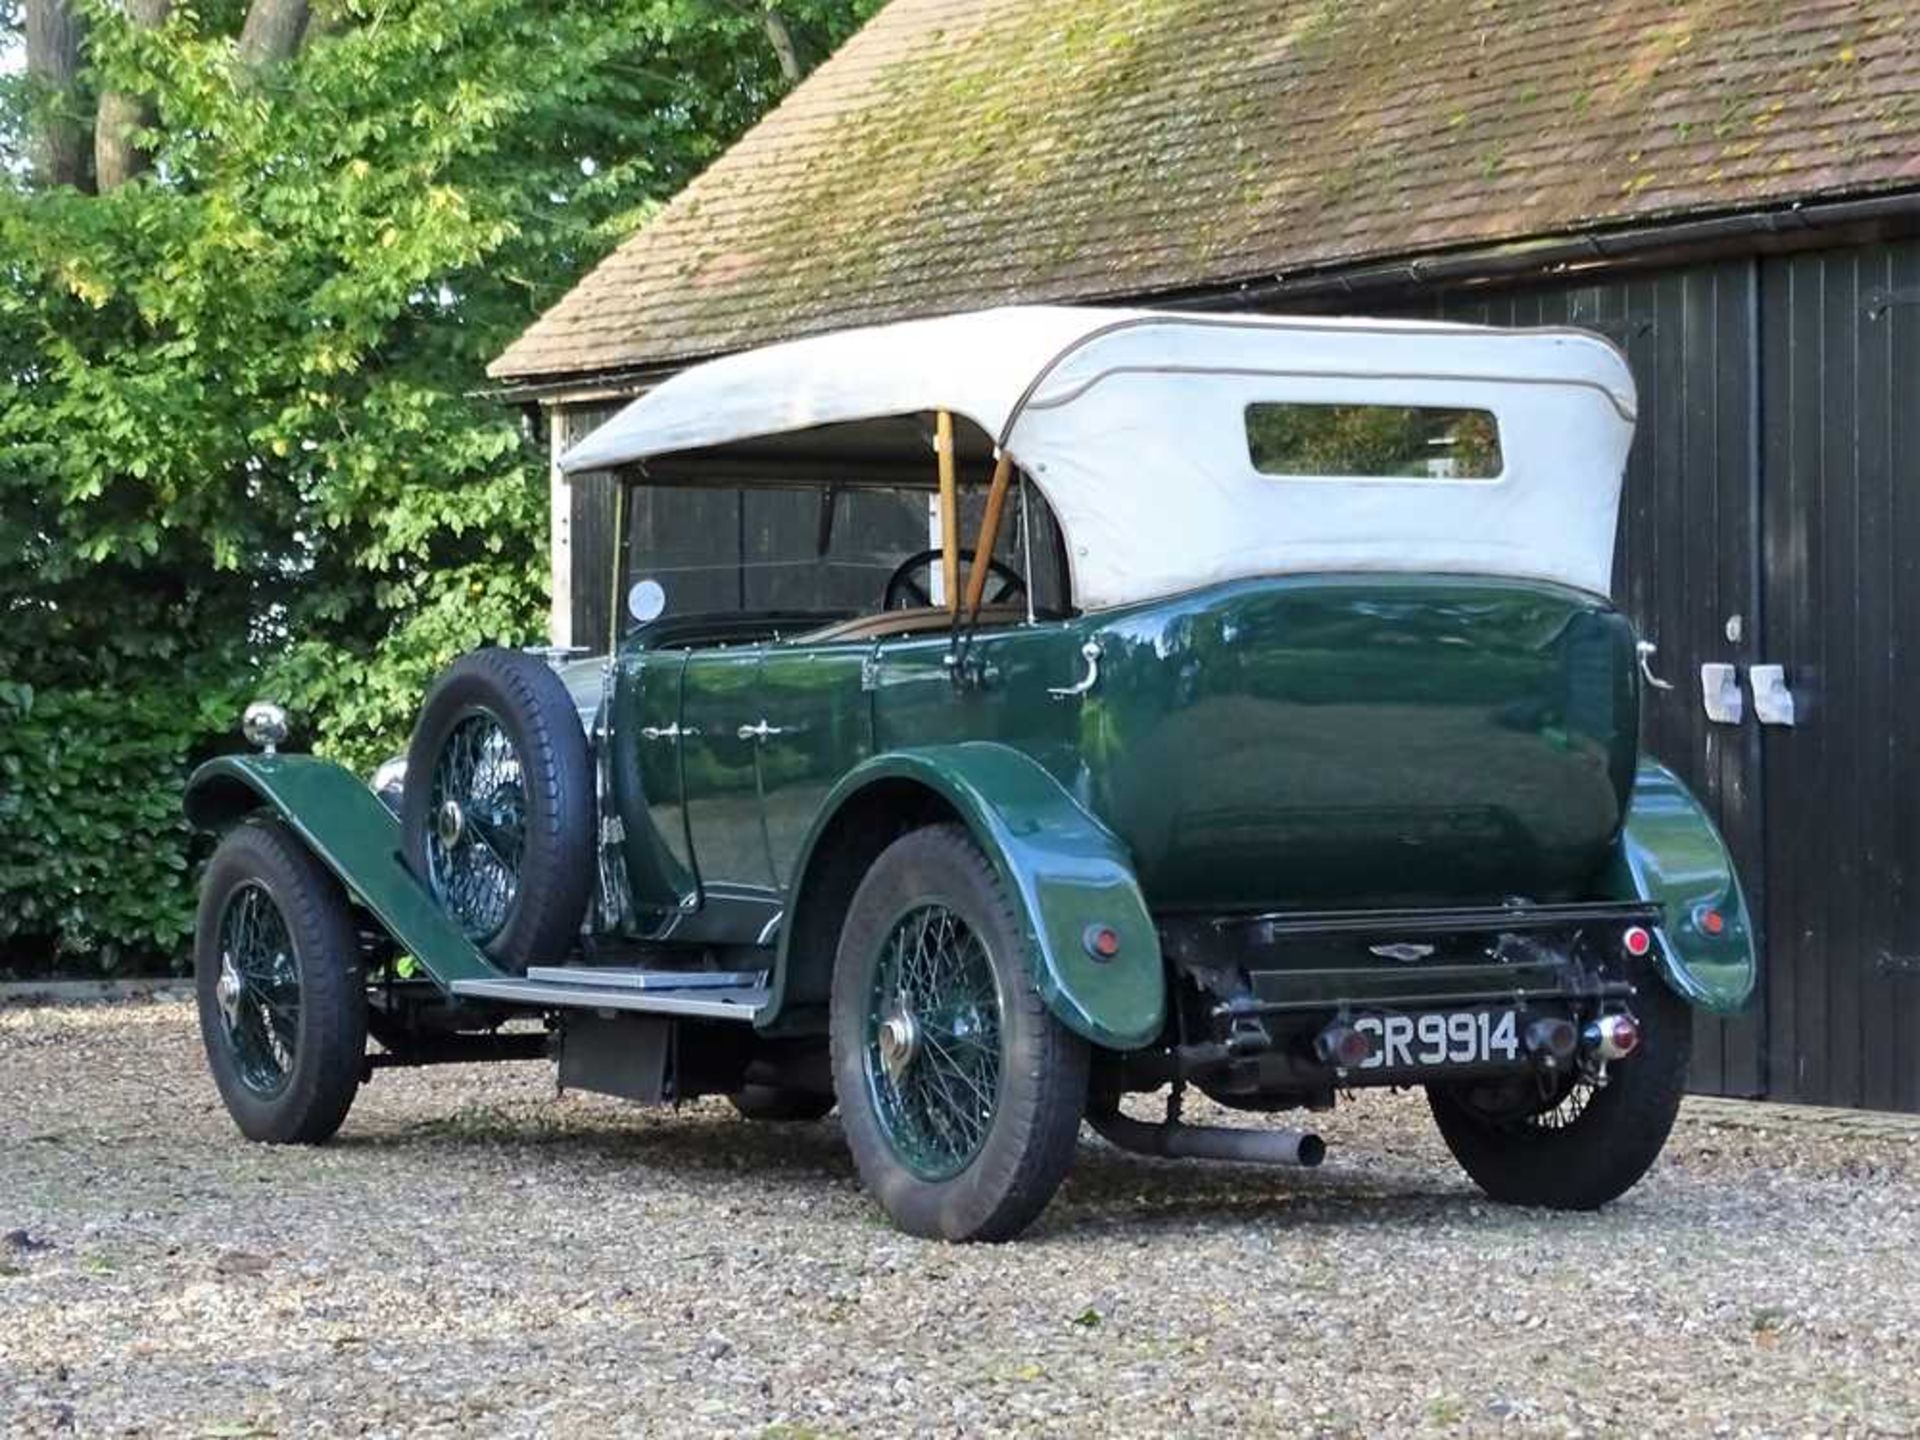 1925 Bentley 3 Litre Dual Cowl Tourer Original coachwork by J. Gurney Nutting - Image 14 of 71